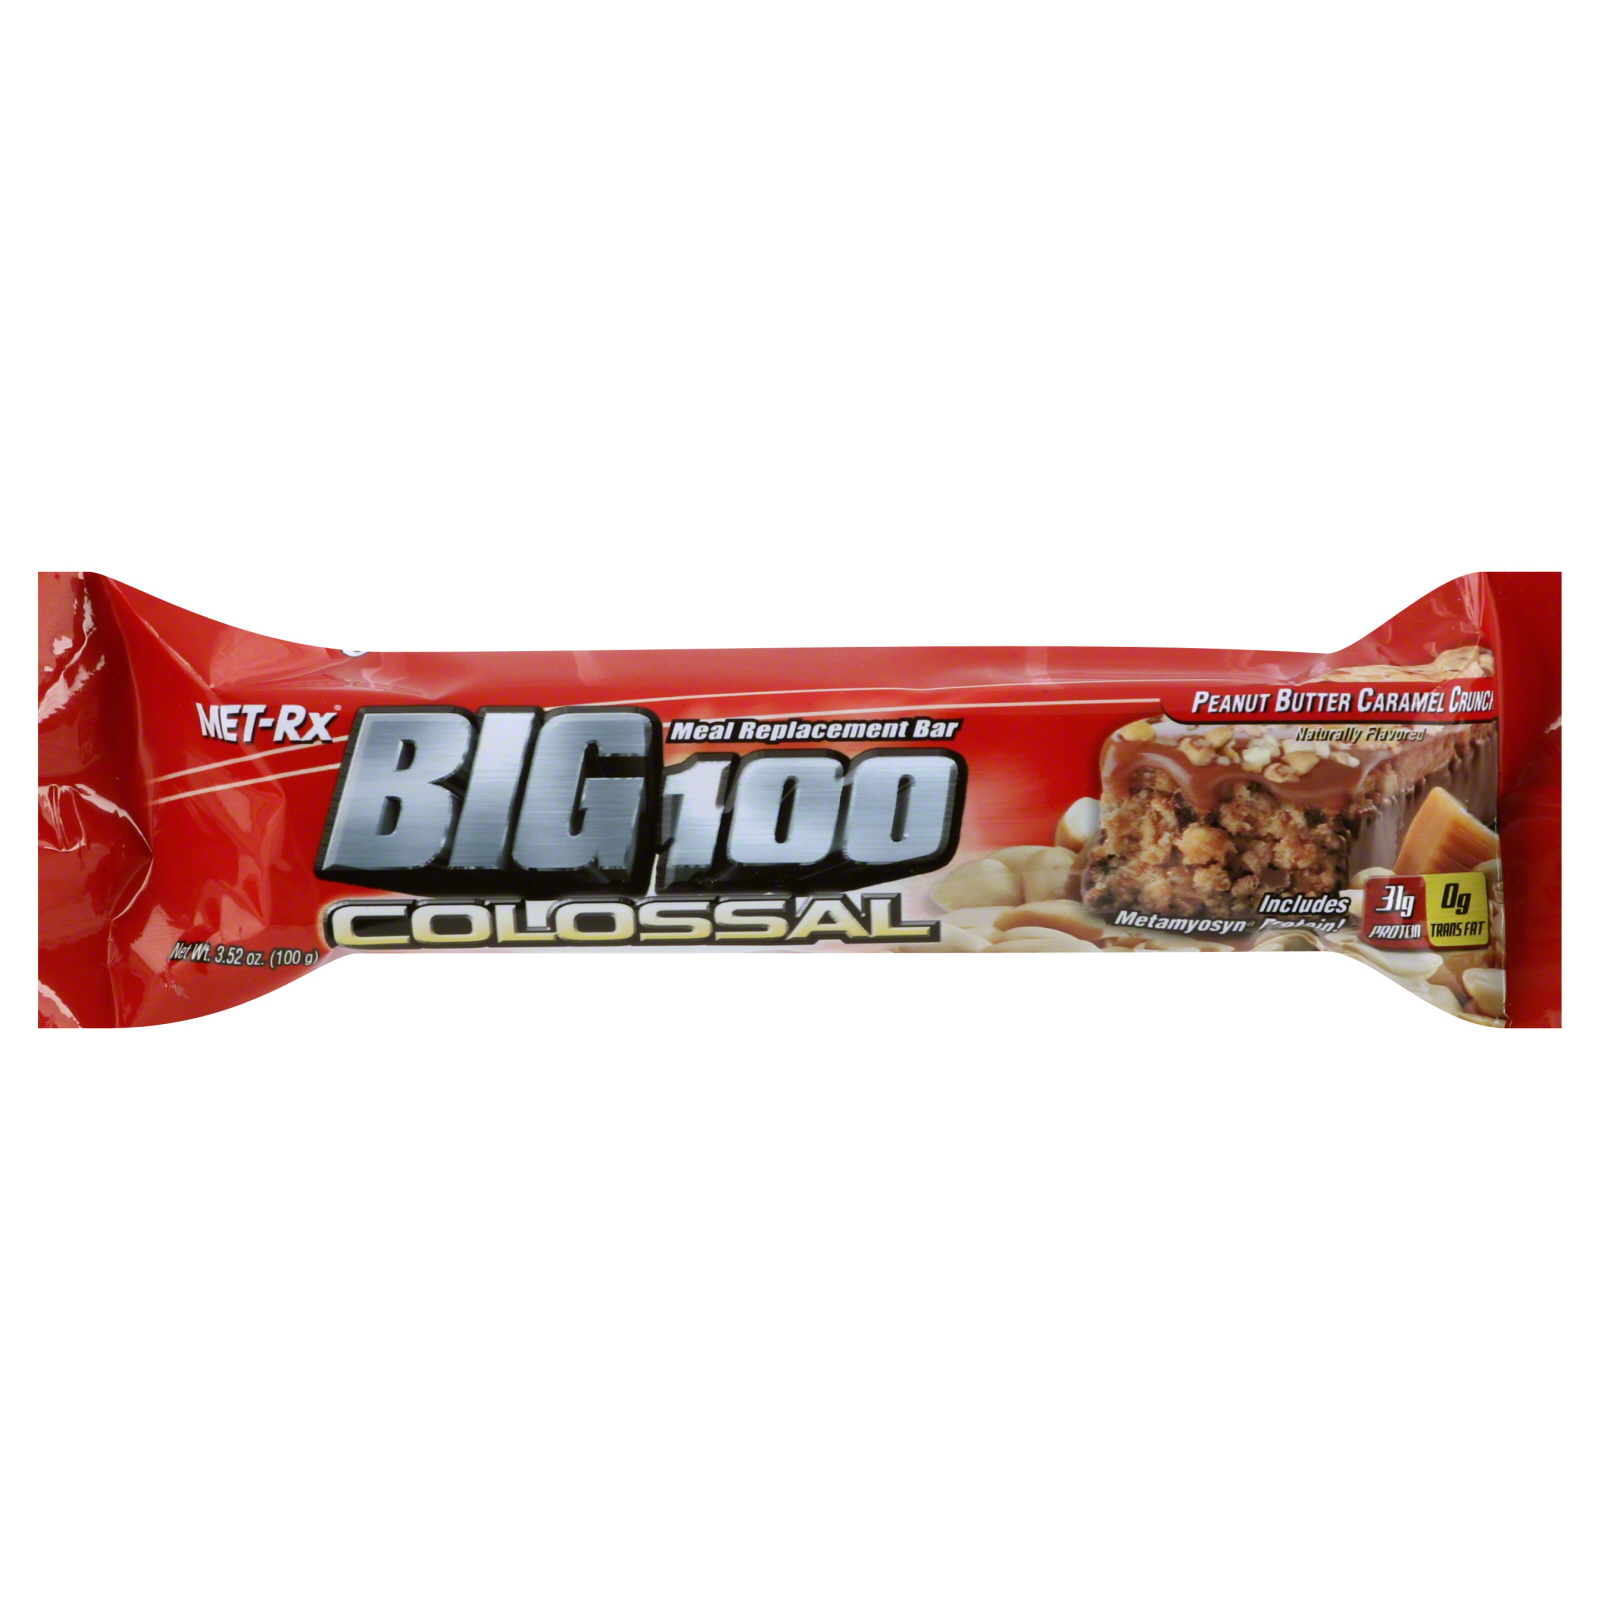 Met-RX Big 100 Colossal Meal Replacement Bar, Peanut Butter Caramel Crunch, 3.52 oz (100 g)